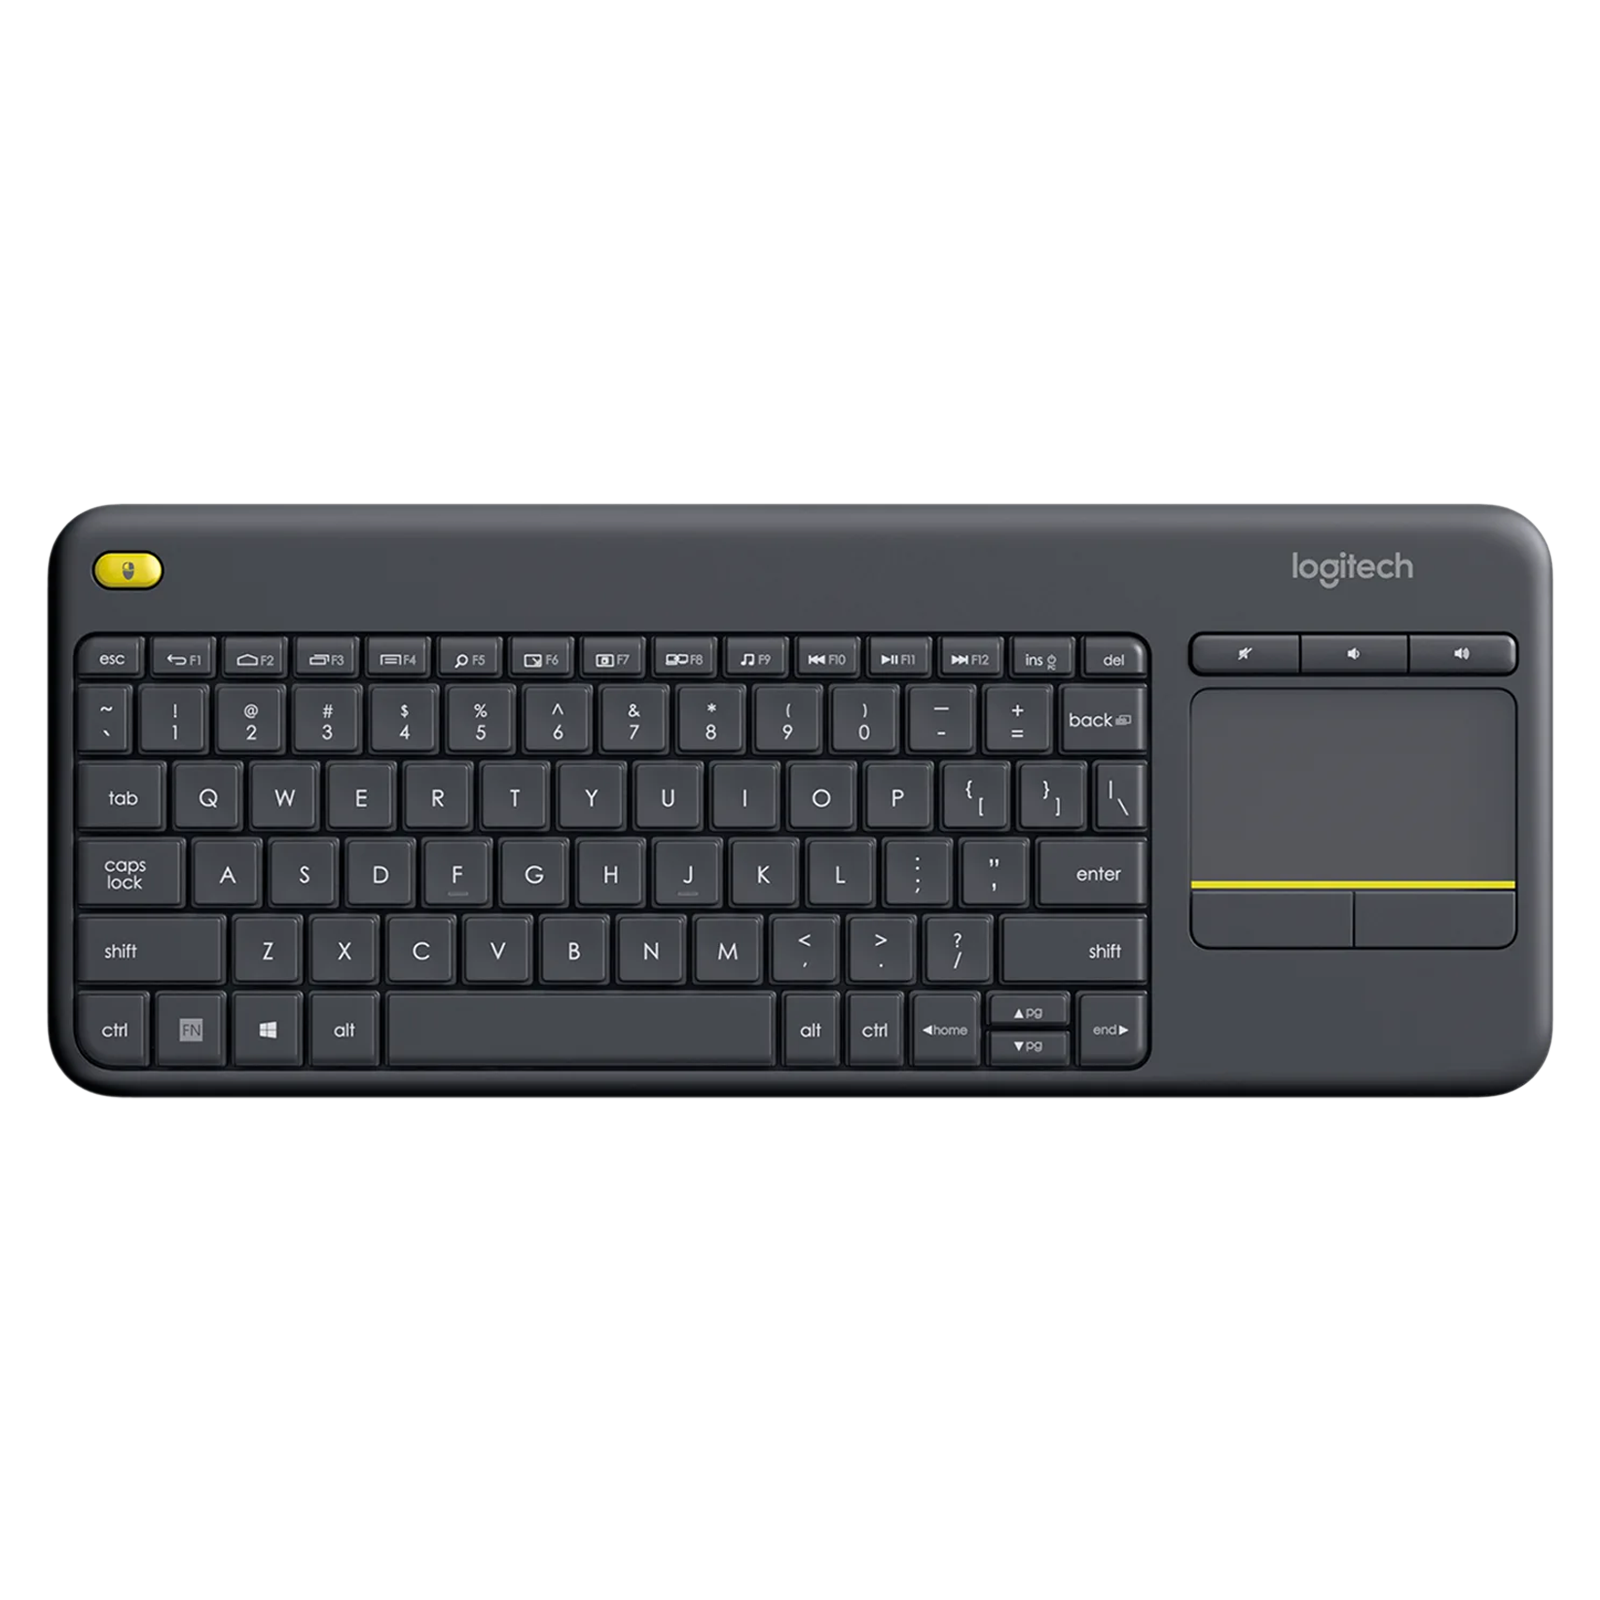 logitech K400 Plus 2.4GHz Wireless Keyboard with Built-in Touchpad (Up to 5 Million Keystrokes, Black)